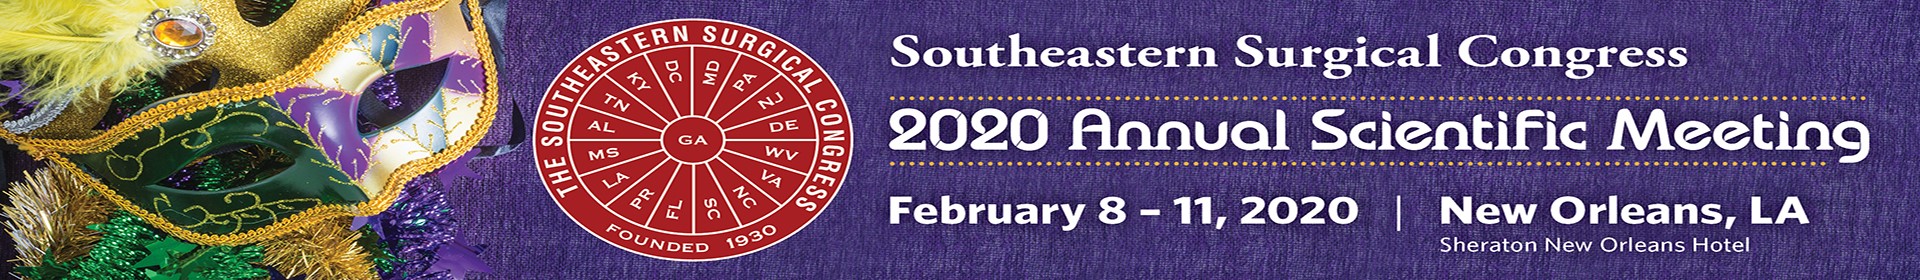 SESC 2020 Annual Scientific Meeting Event Banner